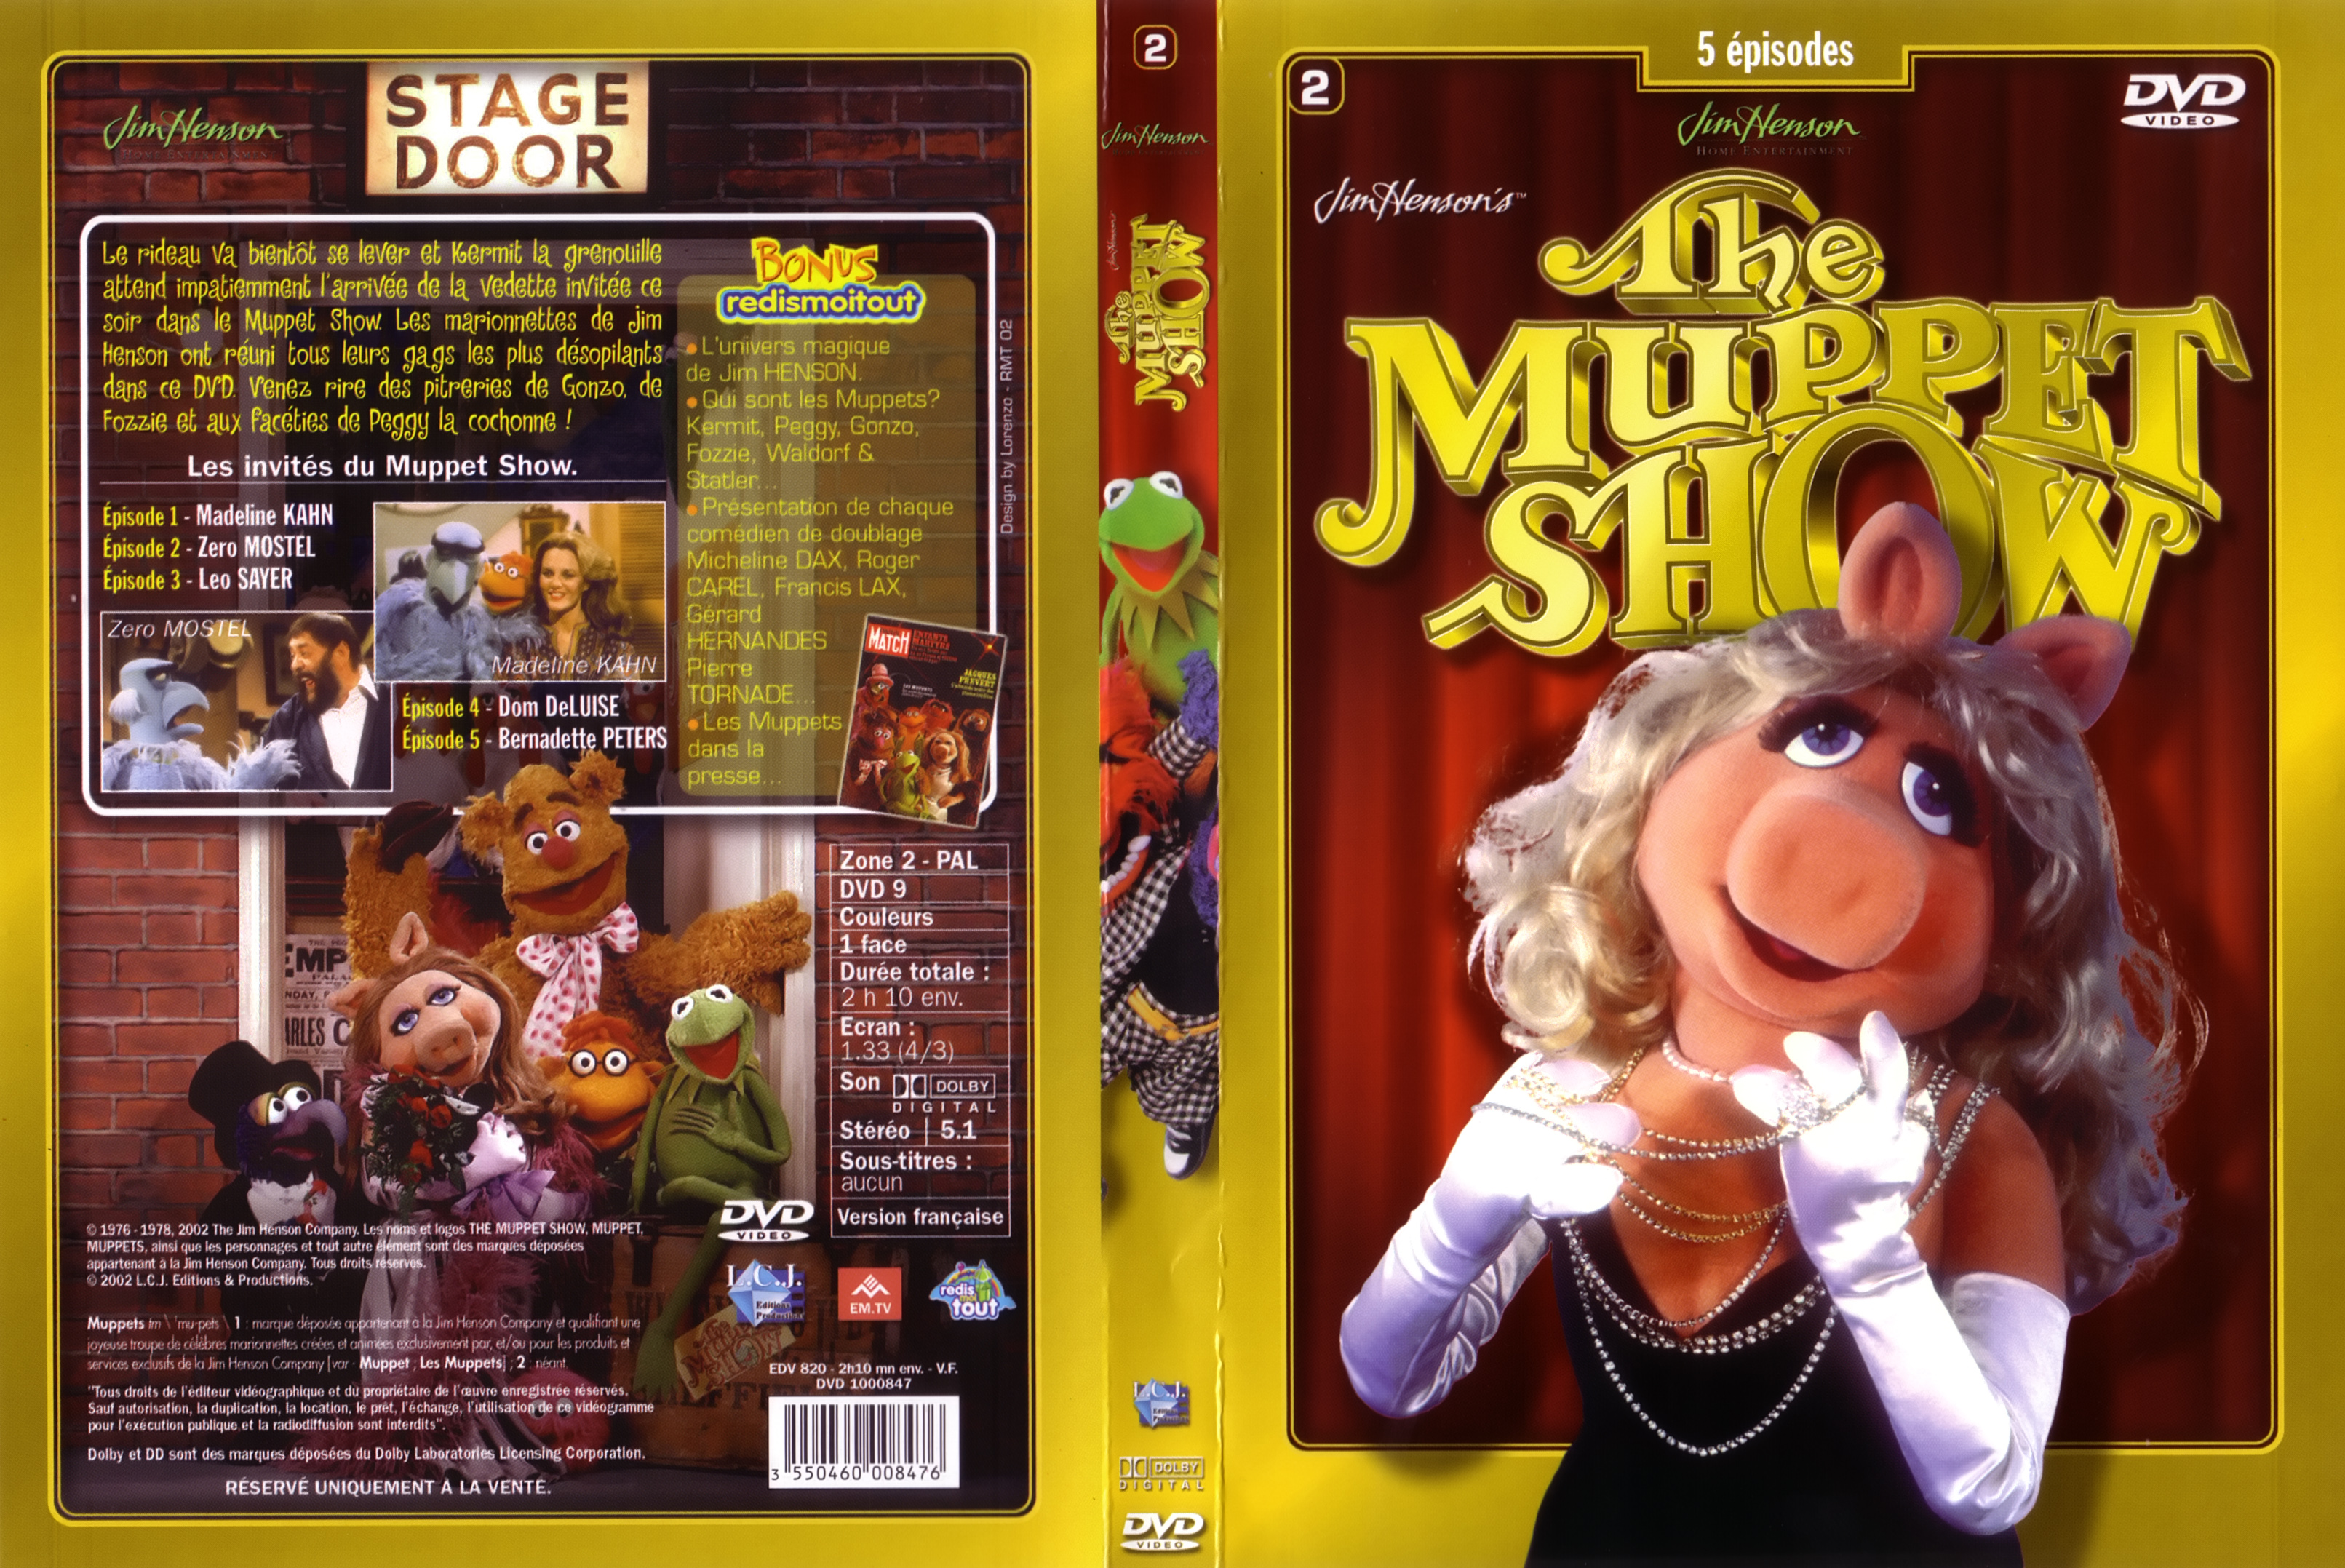 Jaquette DVD The muppet show vol 1 DVD 2